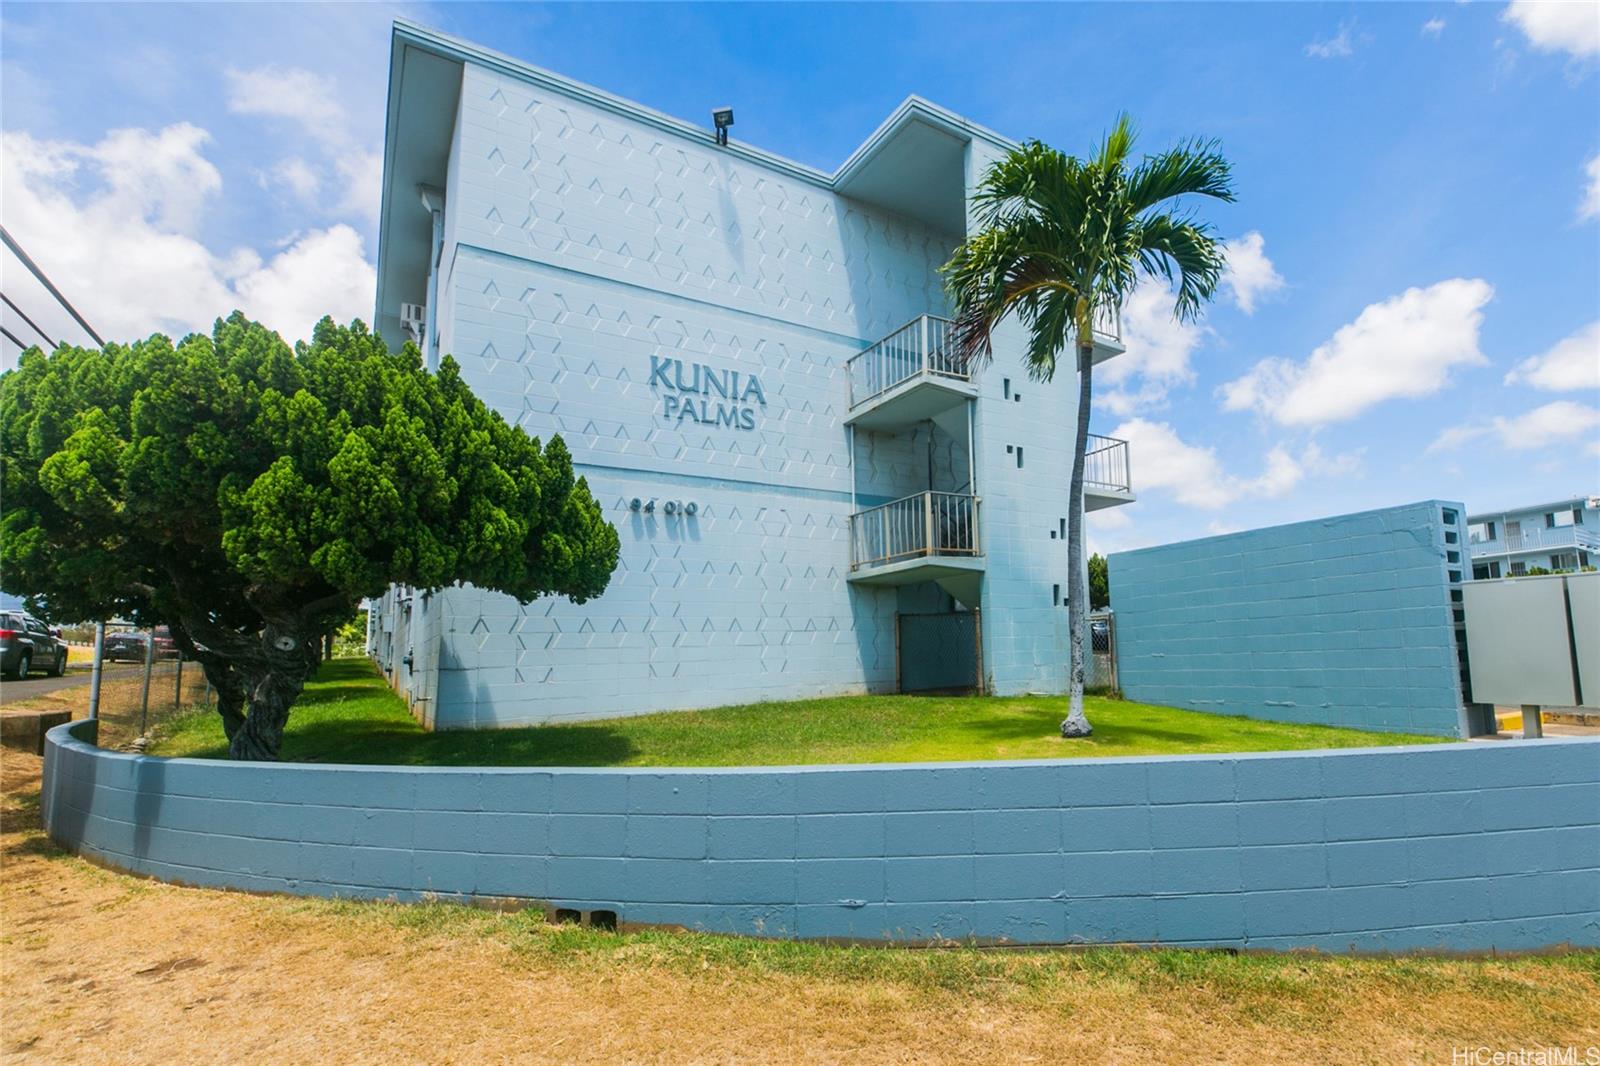 Kunia Palms 94-010 Leolua Street  Unit A315